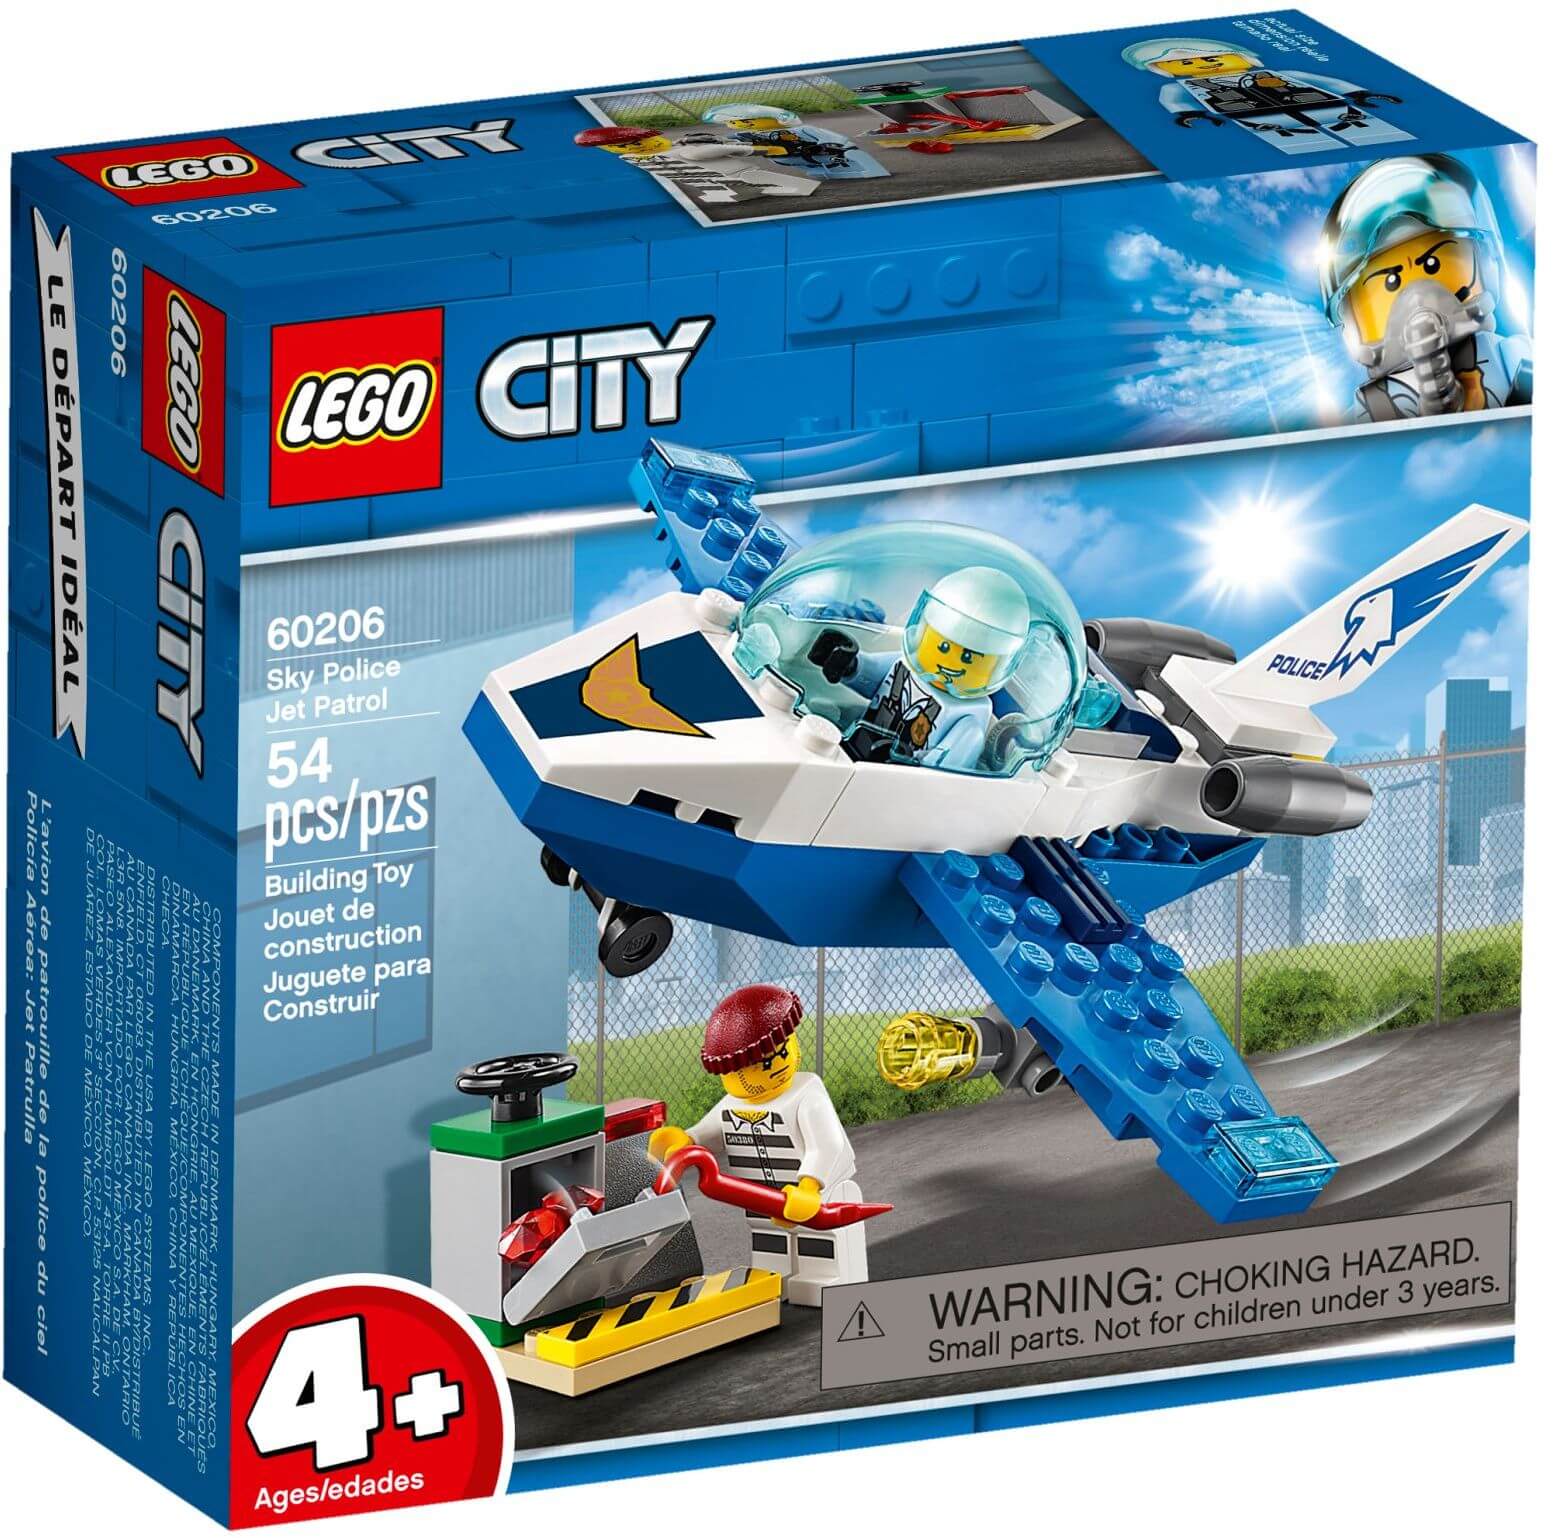 Jet patrulla ( Lego 60206 ) imagen e